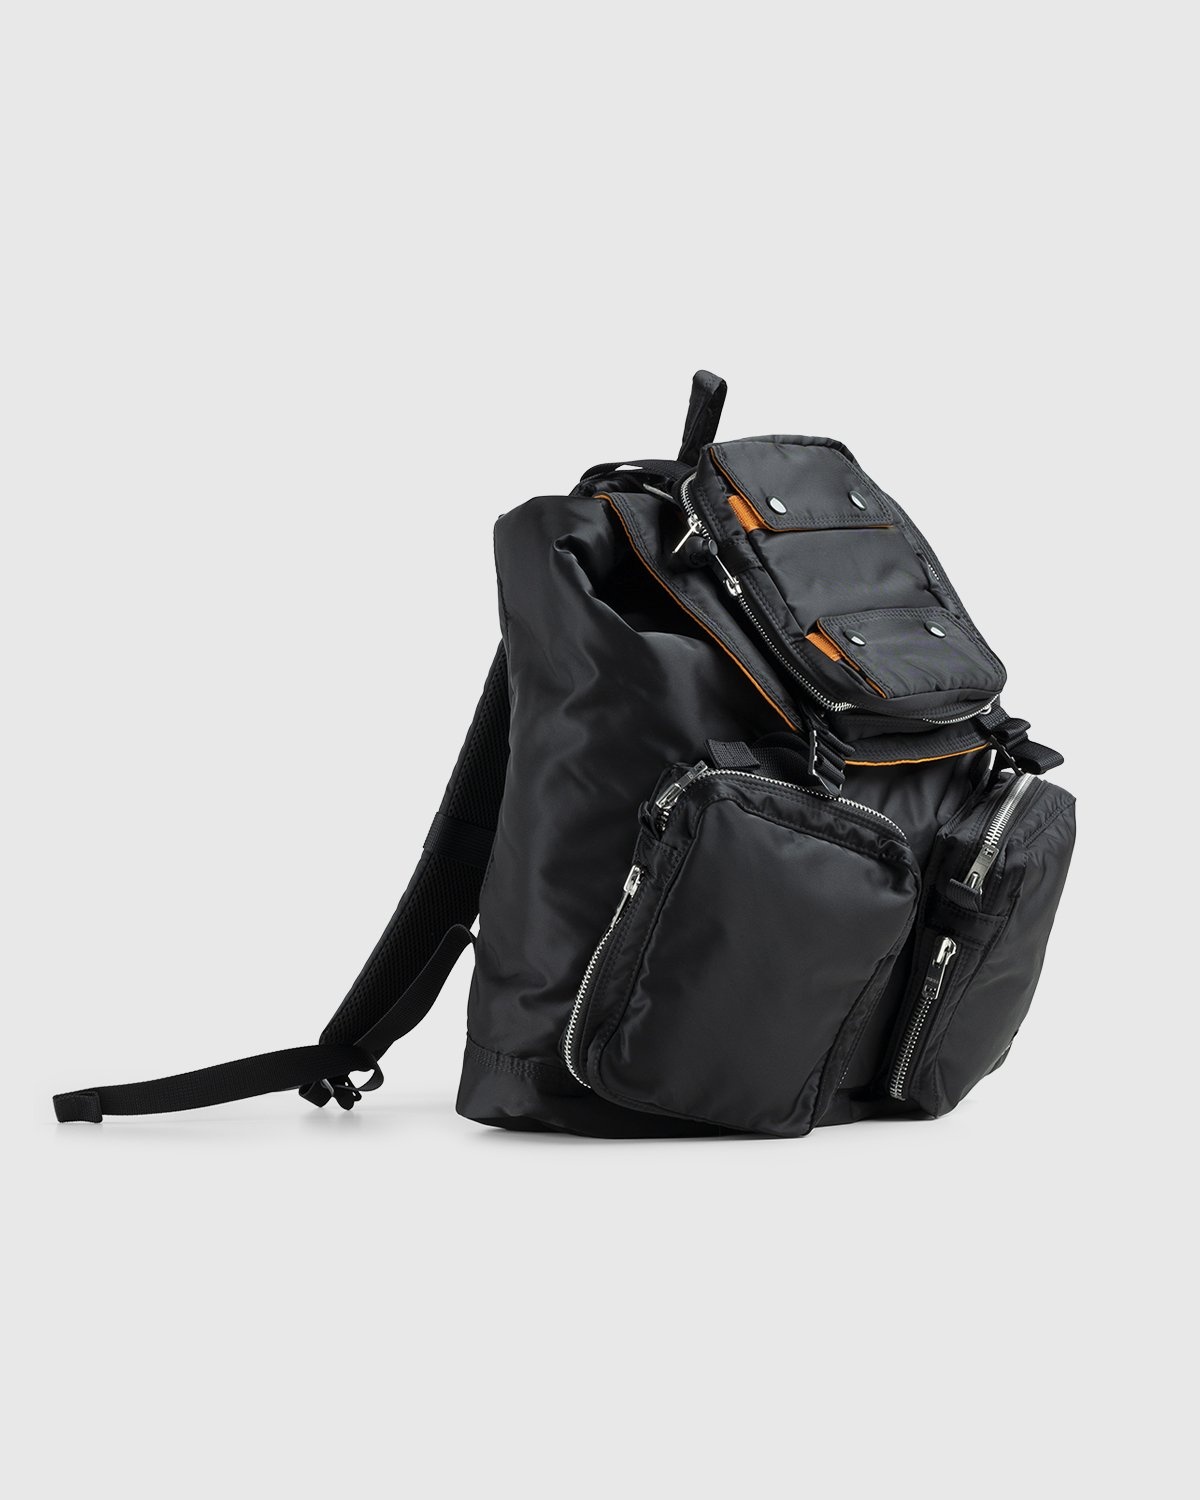 Porter-Yoshida & Co. – Rucksack Black - Backpacks - Black - Image 3